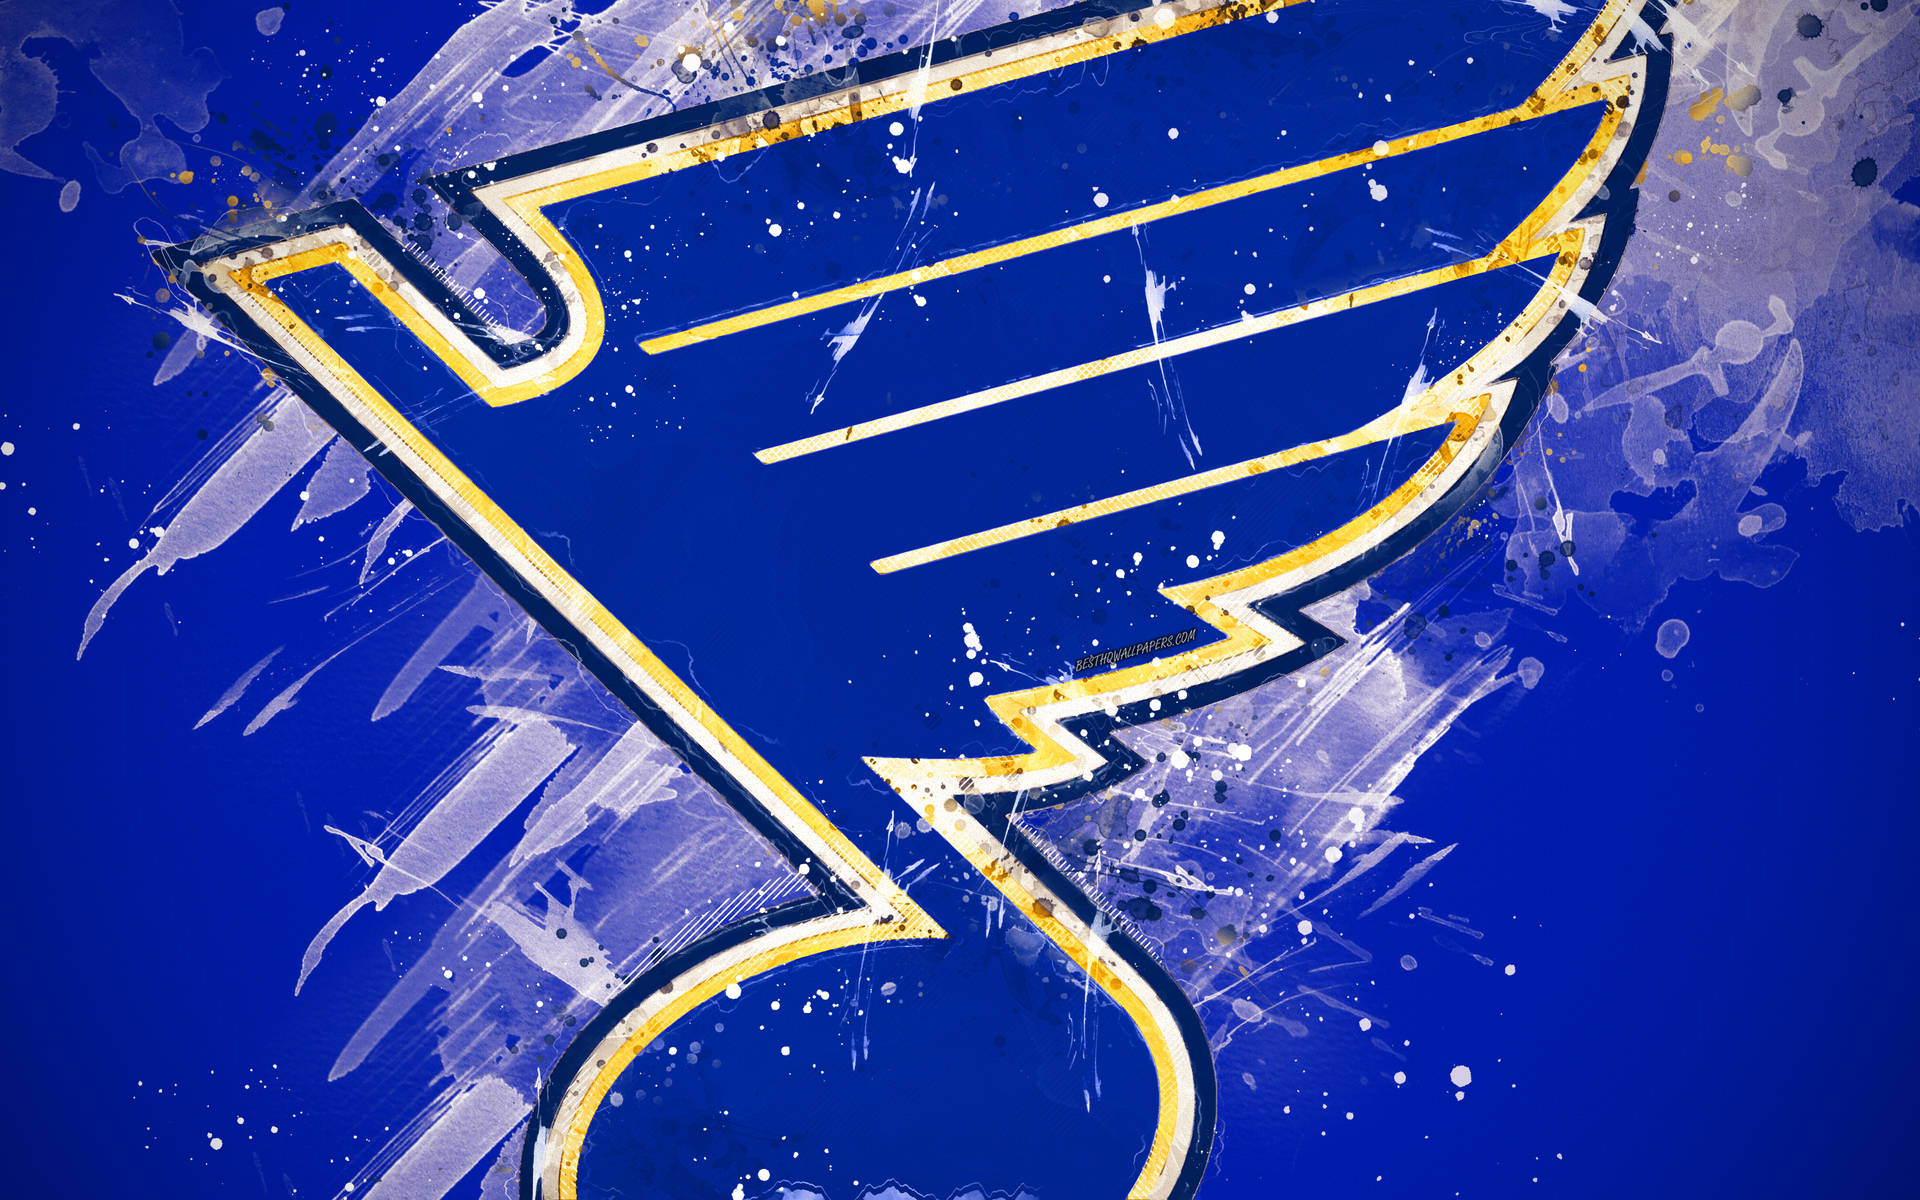 2023 St Louis Blues wallpaper – Pro Sports Backgrounds